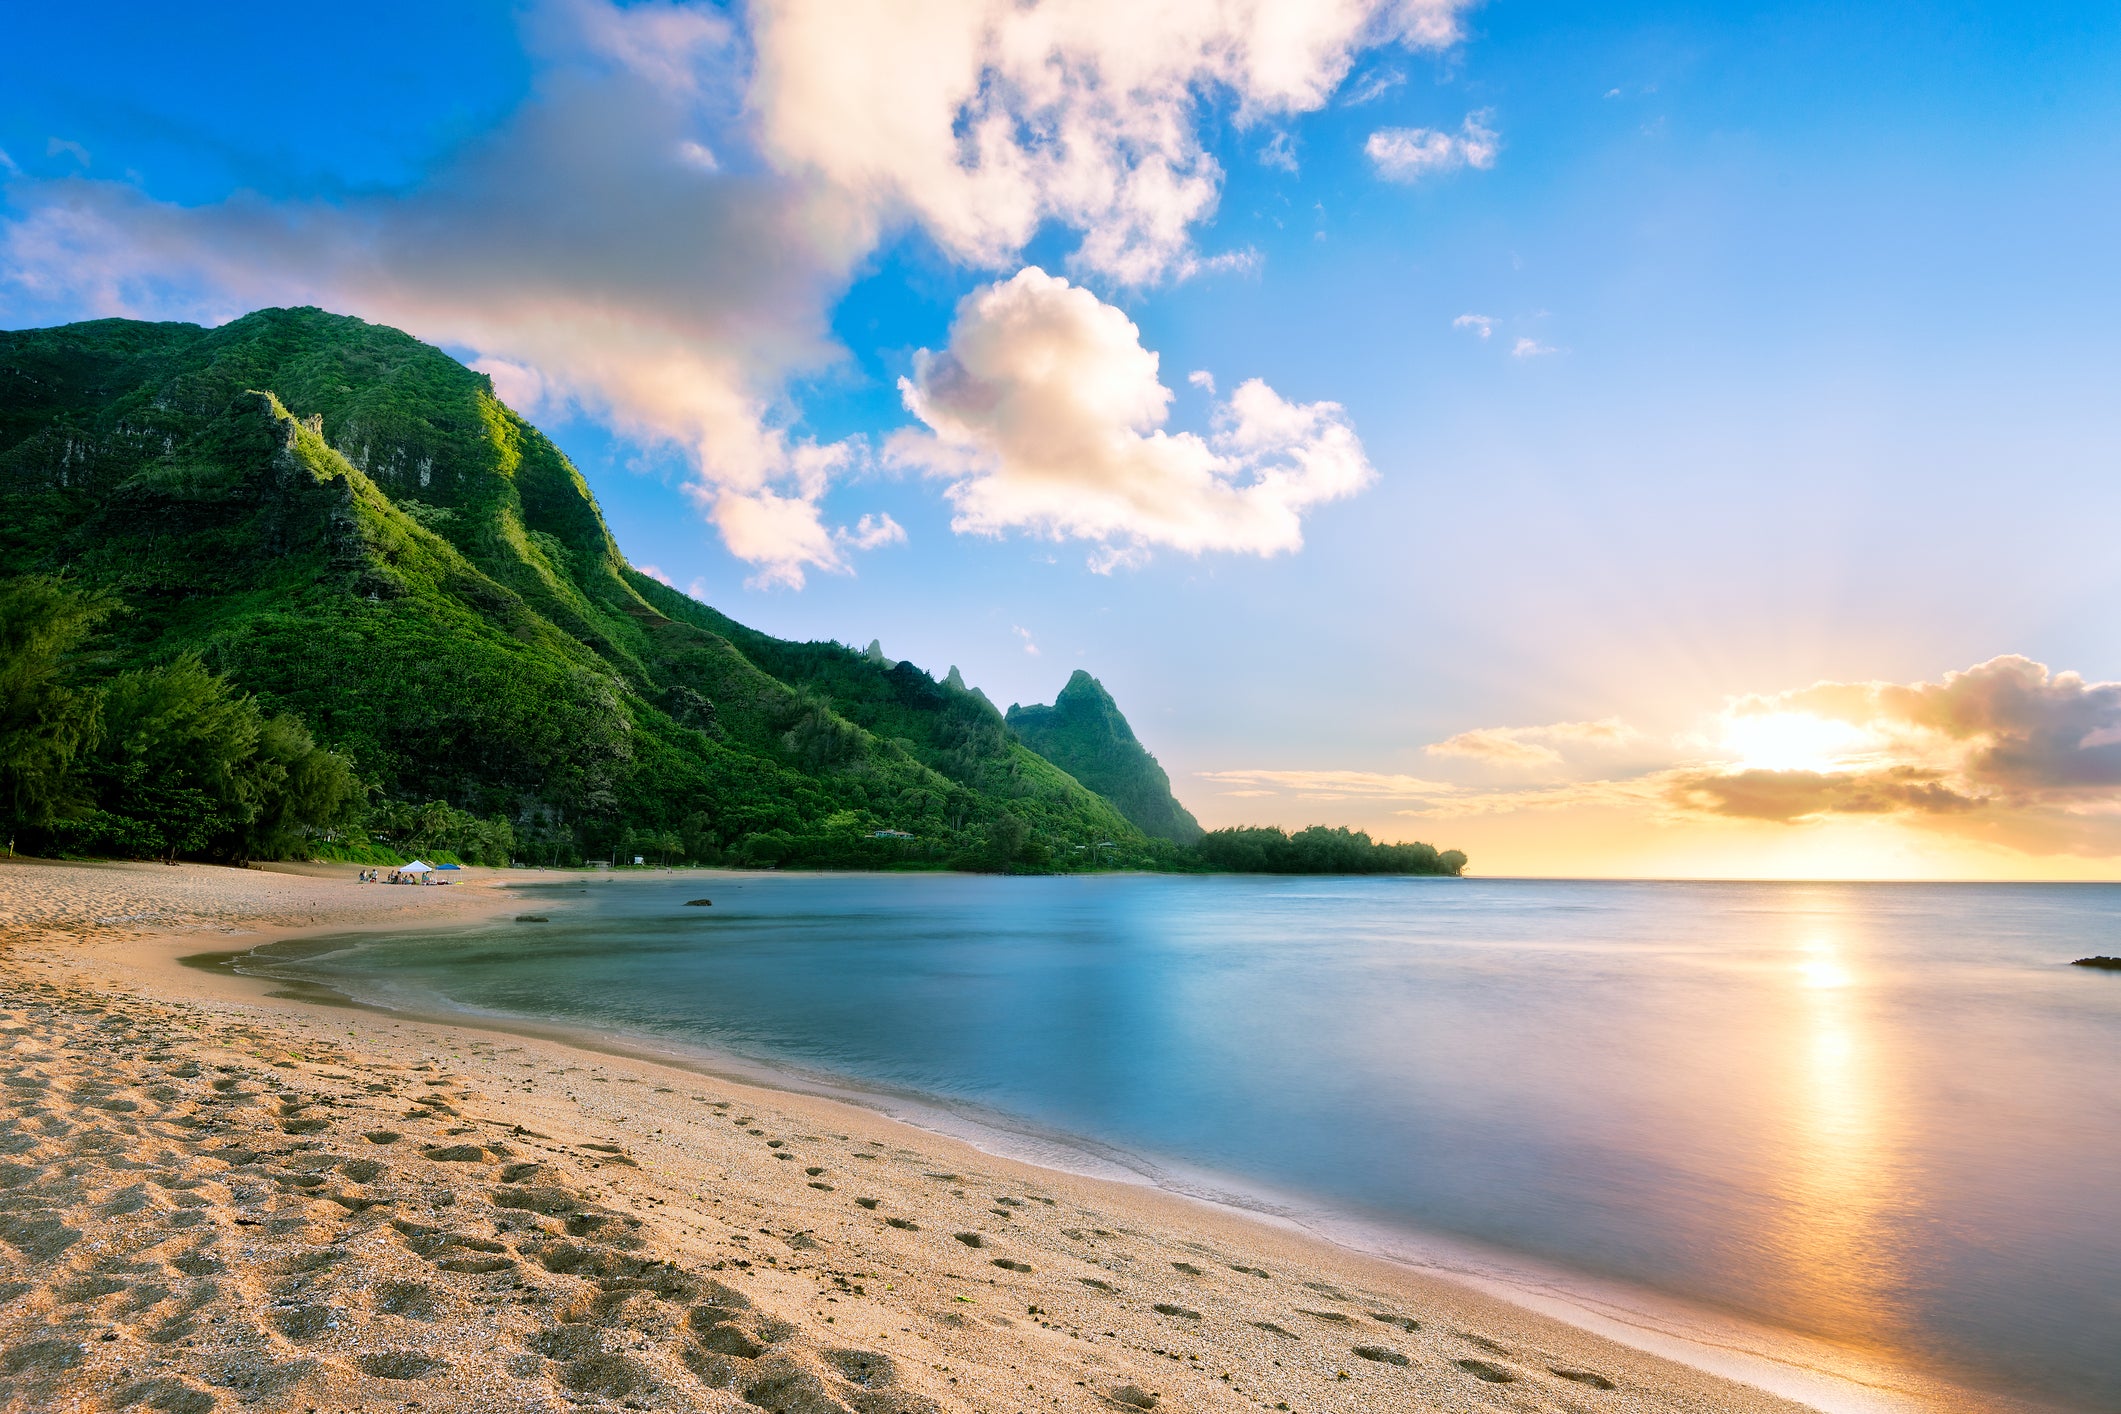 Find golden sands on the beaches on Kauai, Hawaii